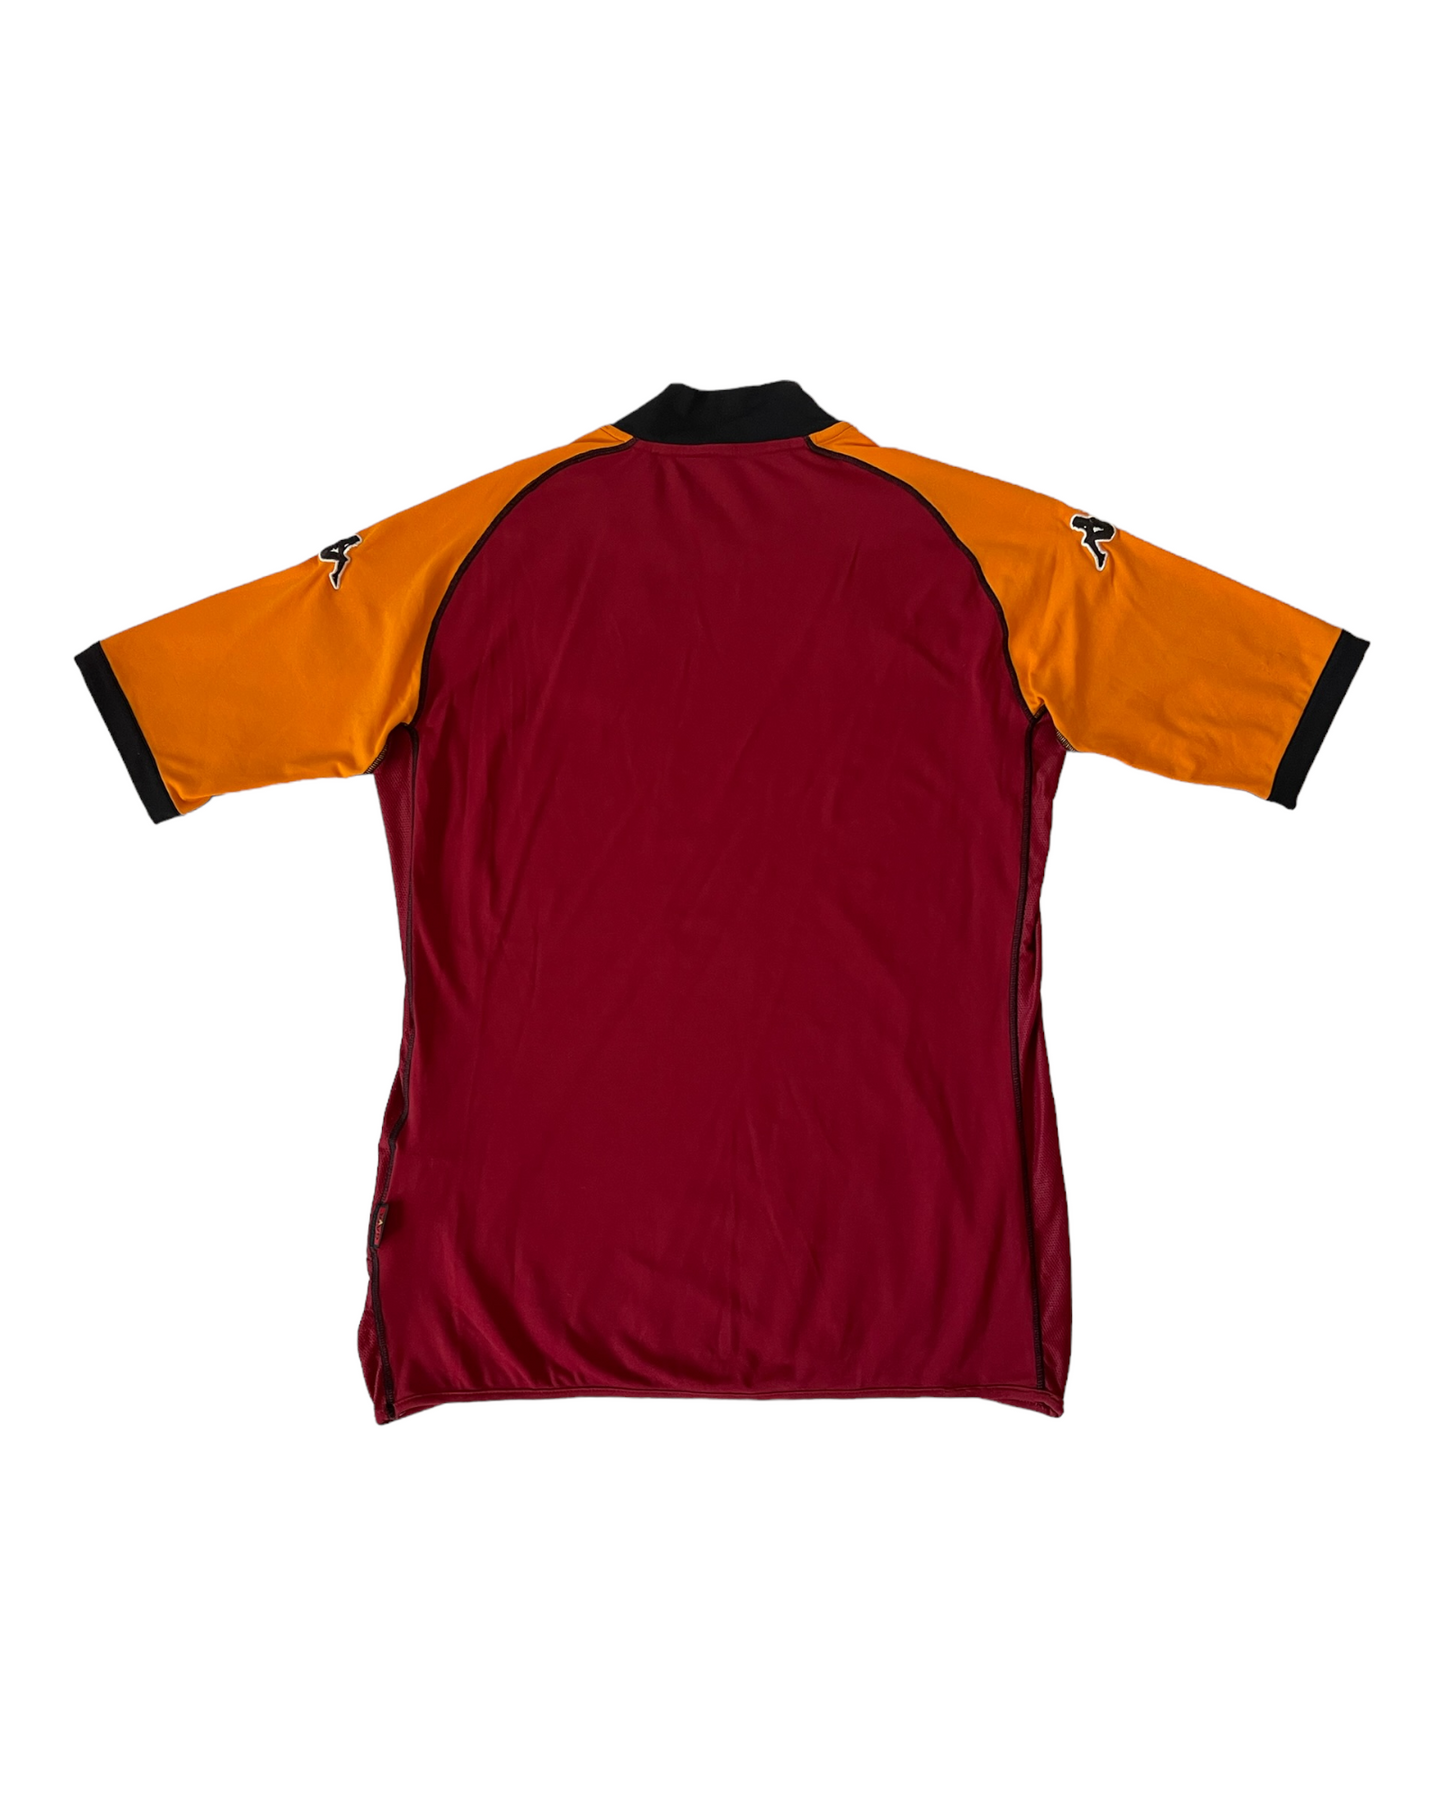 AS Roma Kappa 2002 - 2003 Champion League Home Football Shirt Size L Slimfit Mazda